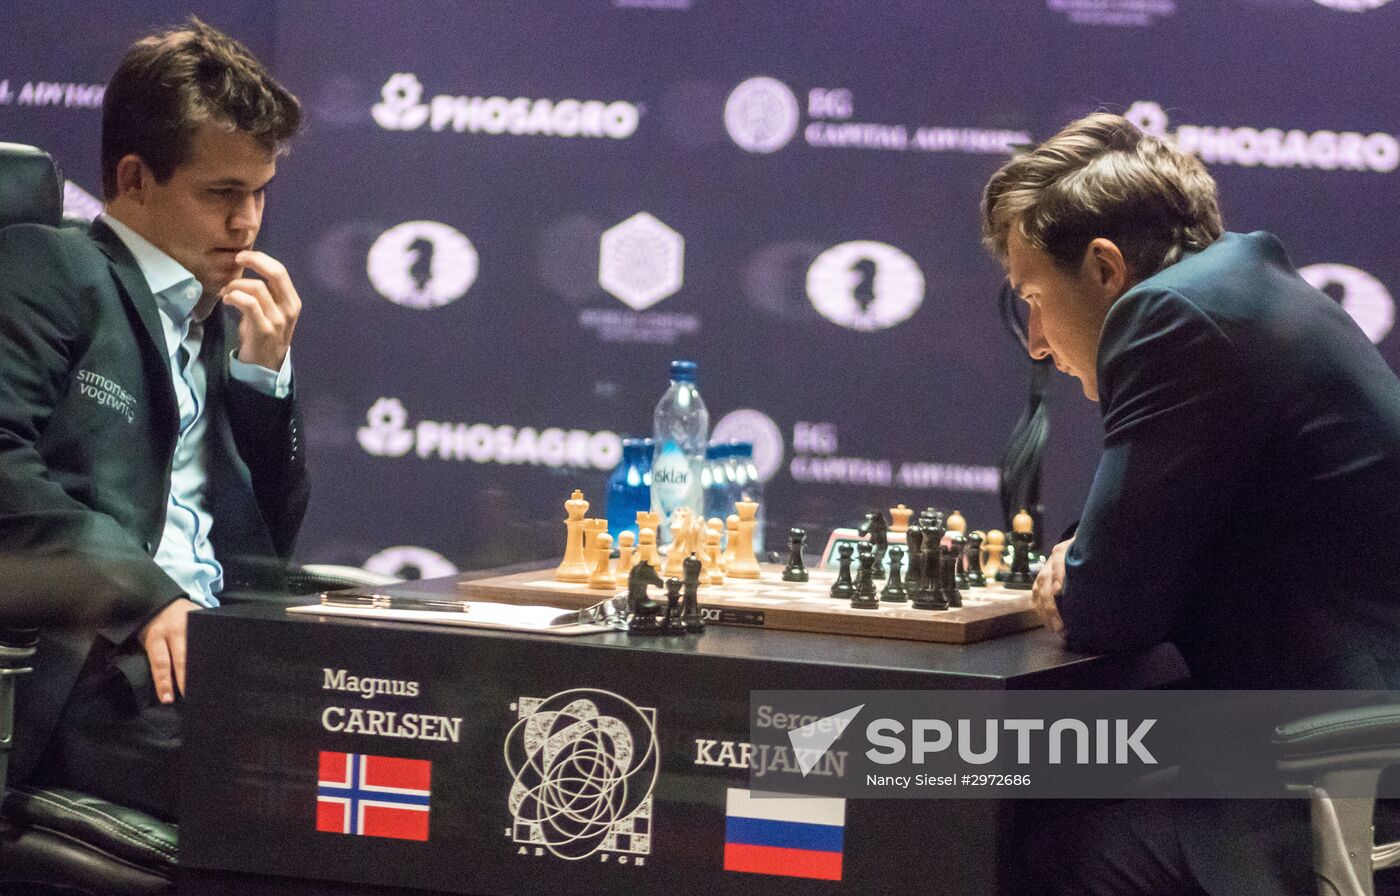 2016 World Chess Championship match Carlsen vs. Karjakin